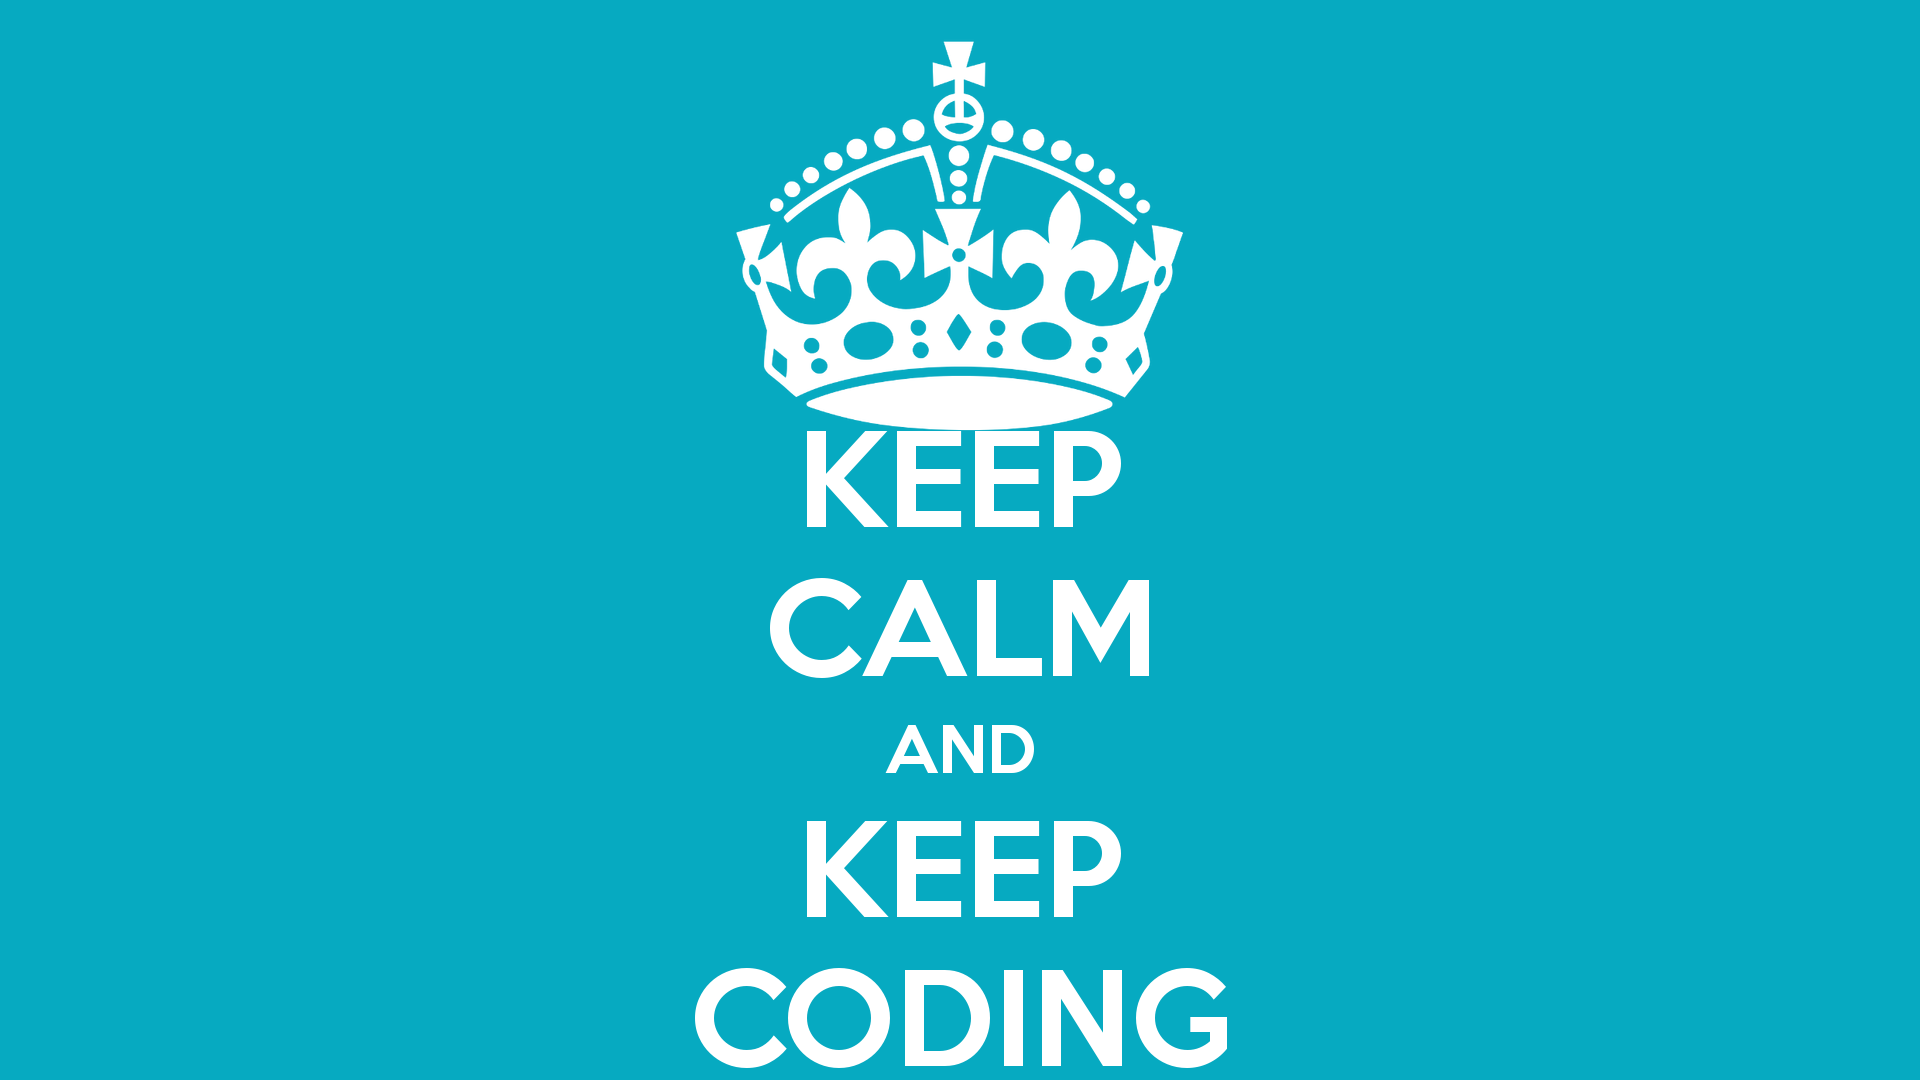 Keep calm and keep coding with code(love)